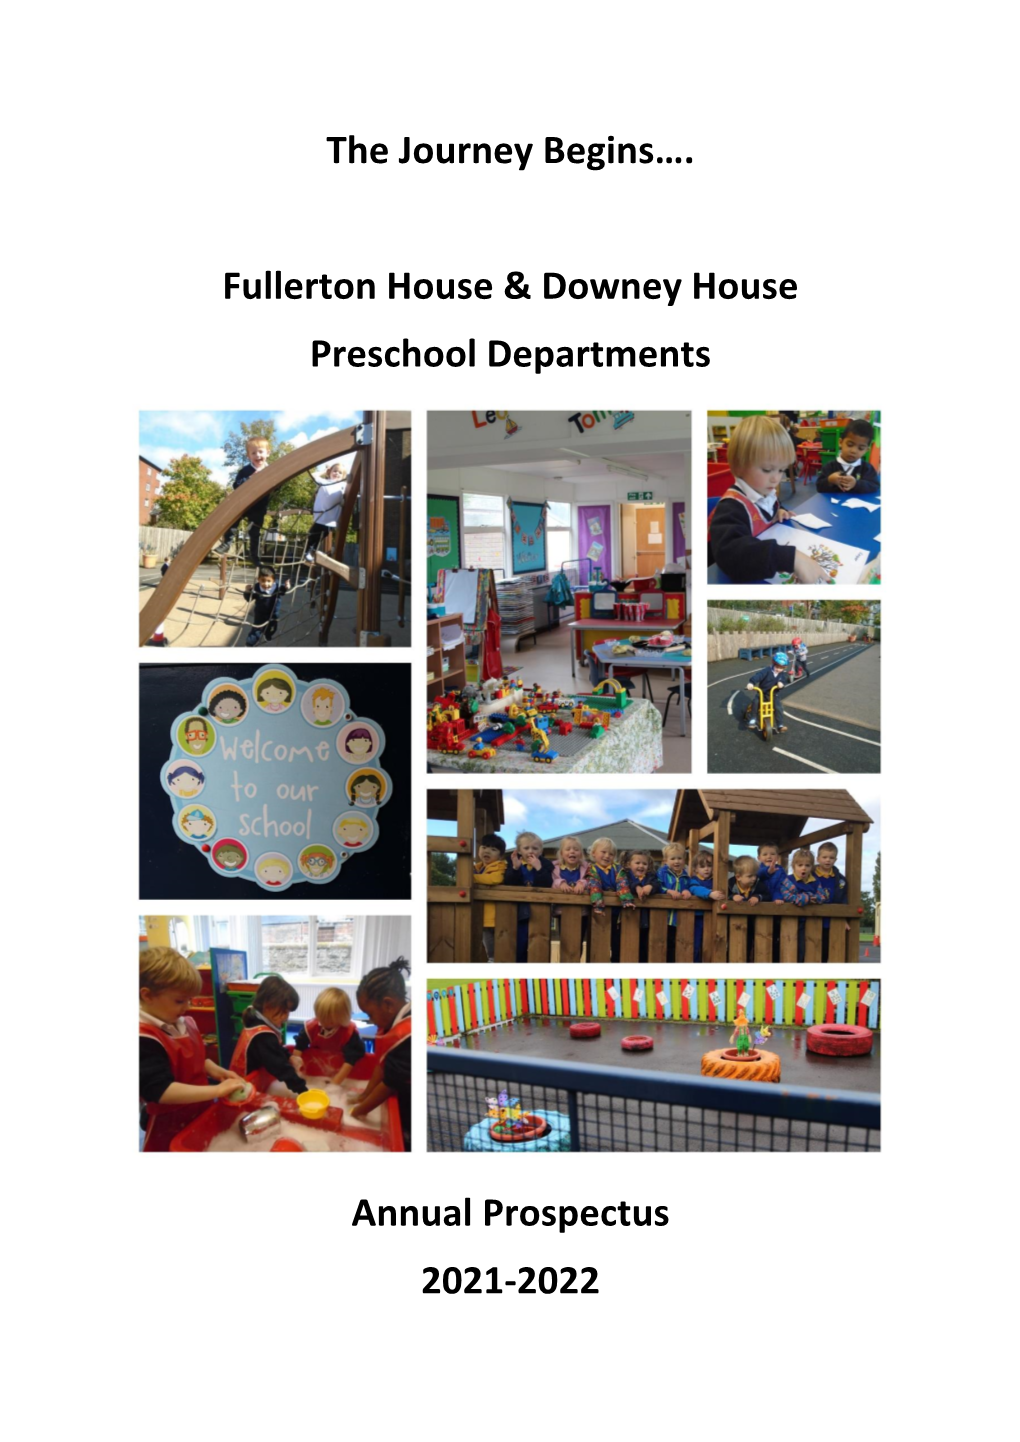 The Journey Begins…. Fullerton House & Downey House Preschool